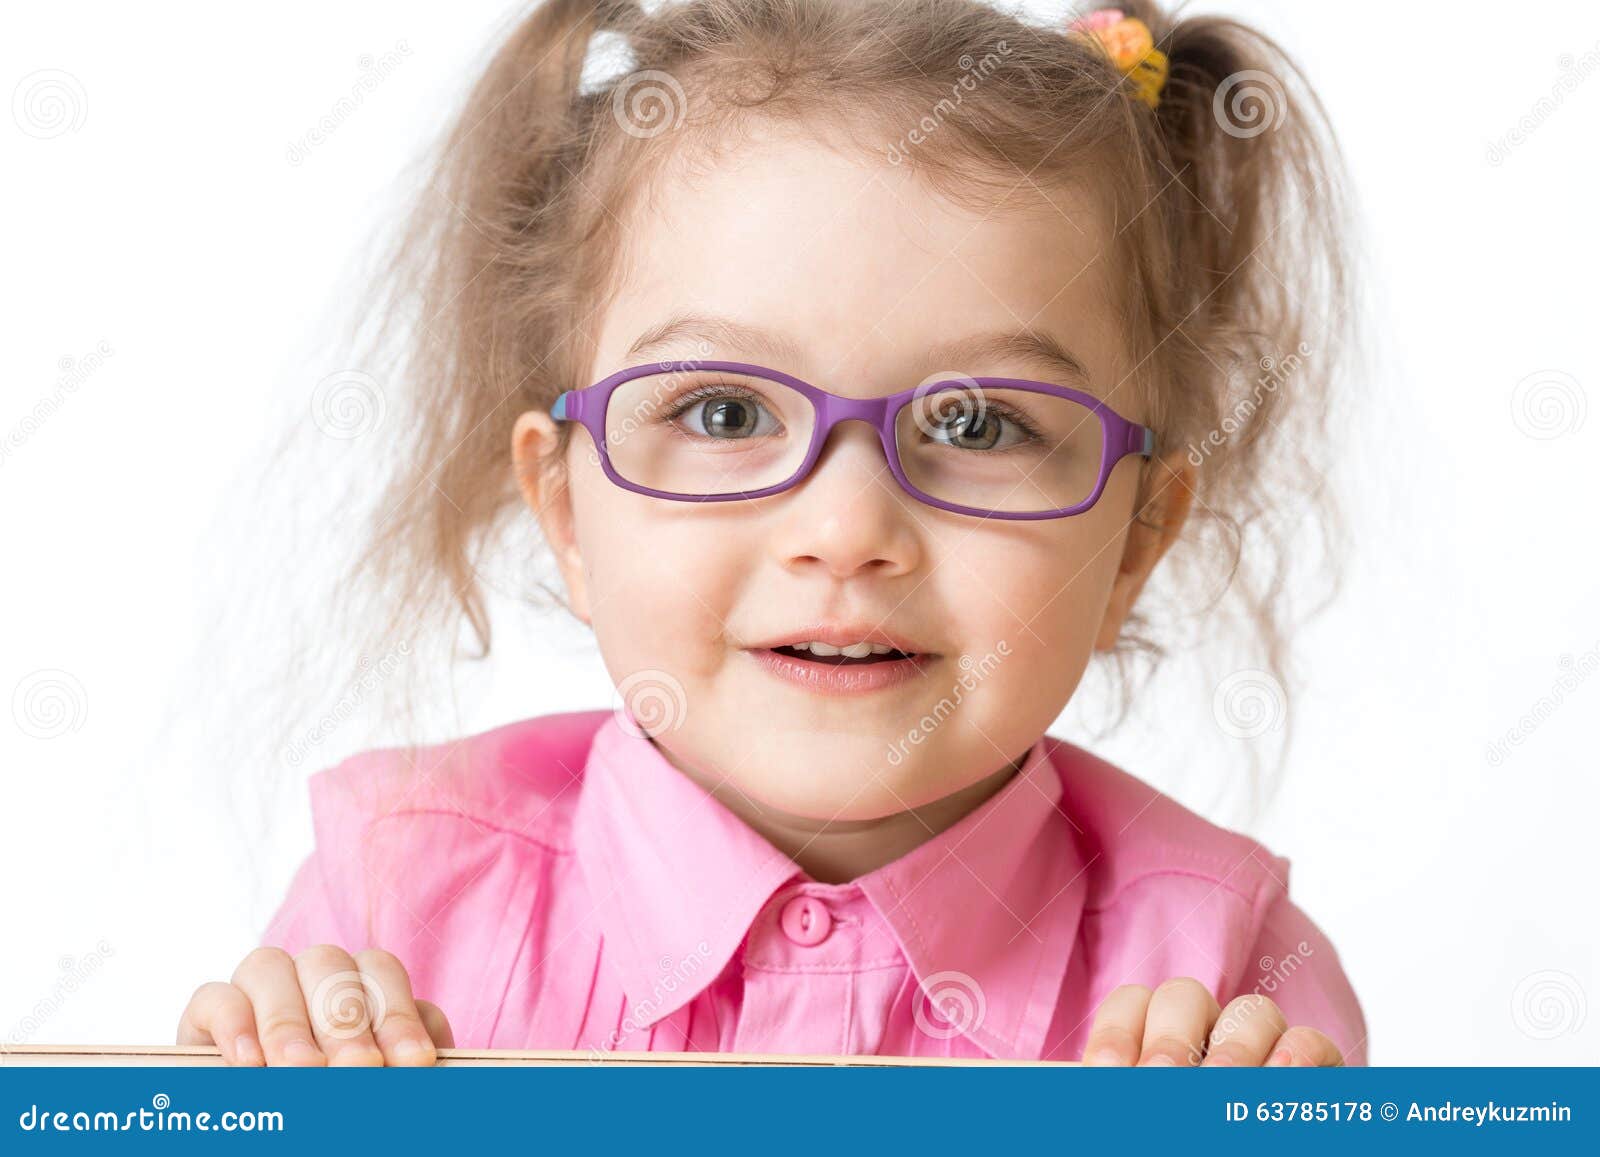 smiling girl wearing glasses closeup portrait